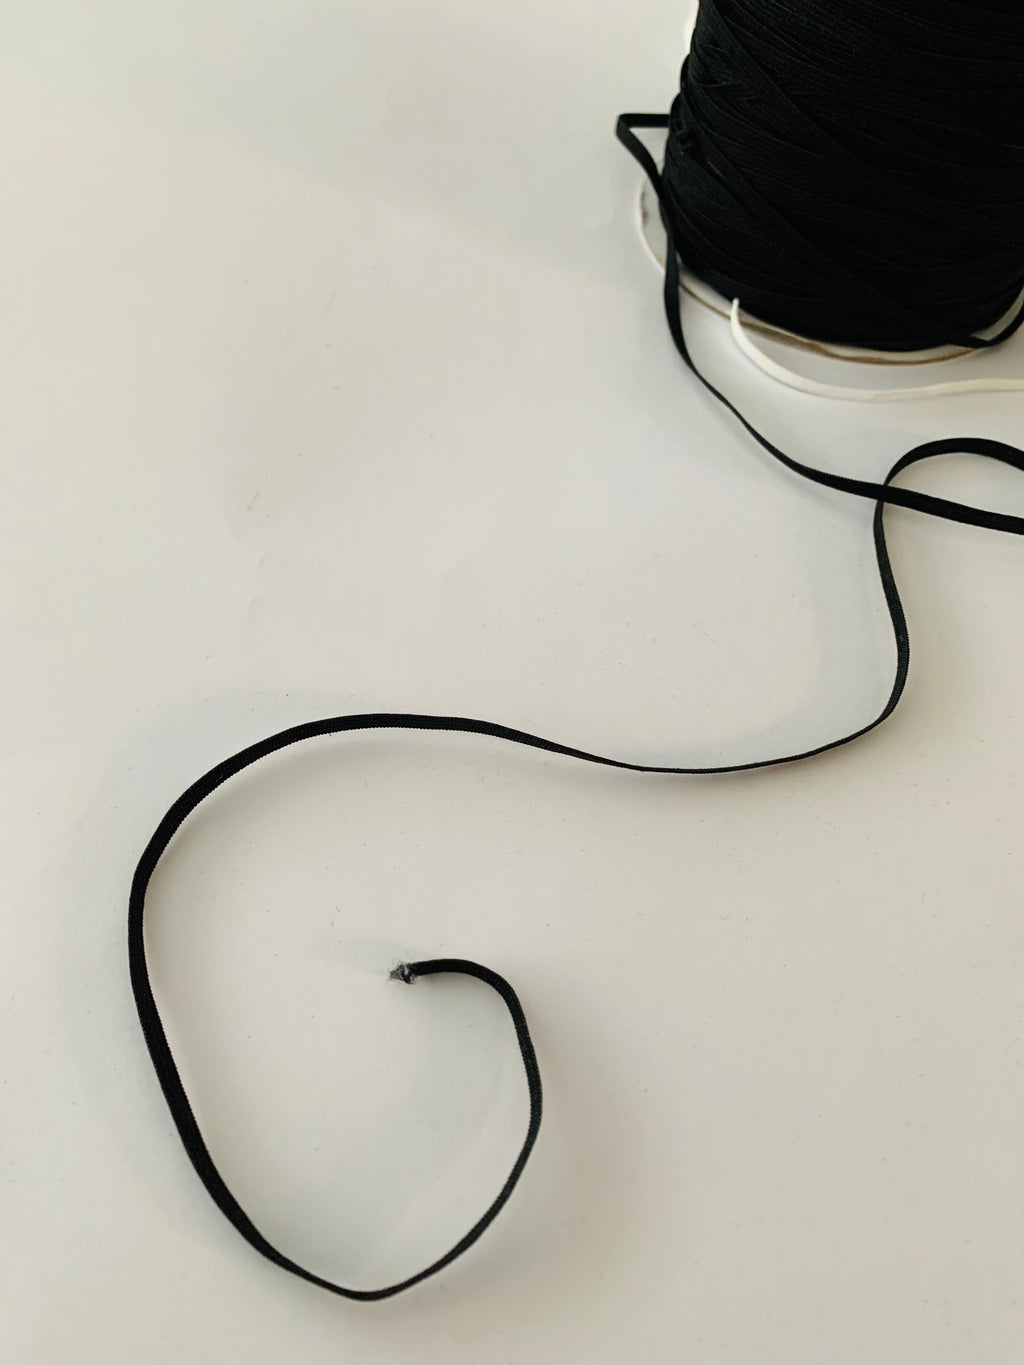 Elastic: Soft braided flat 3mm in black